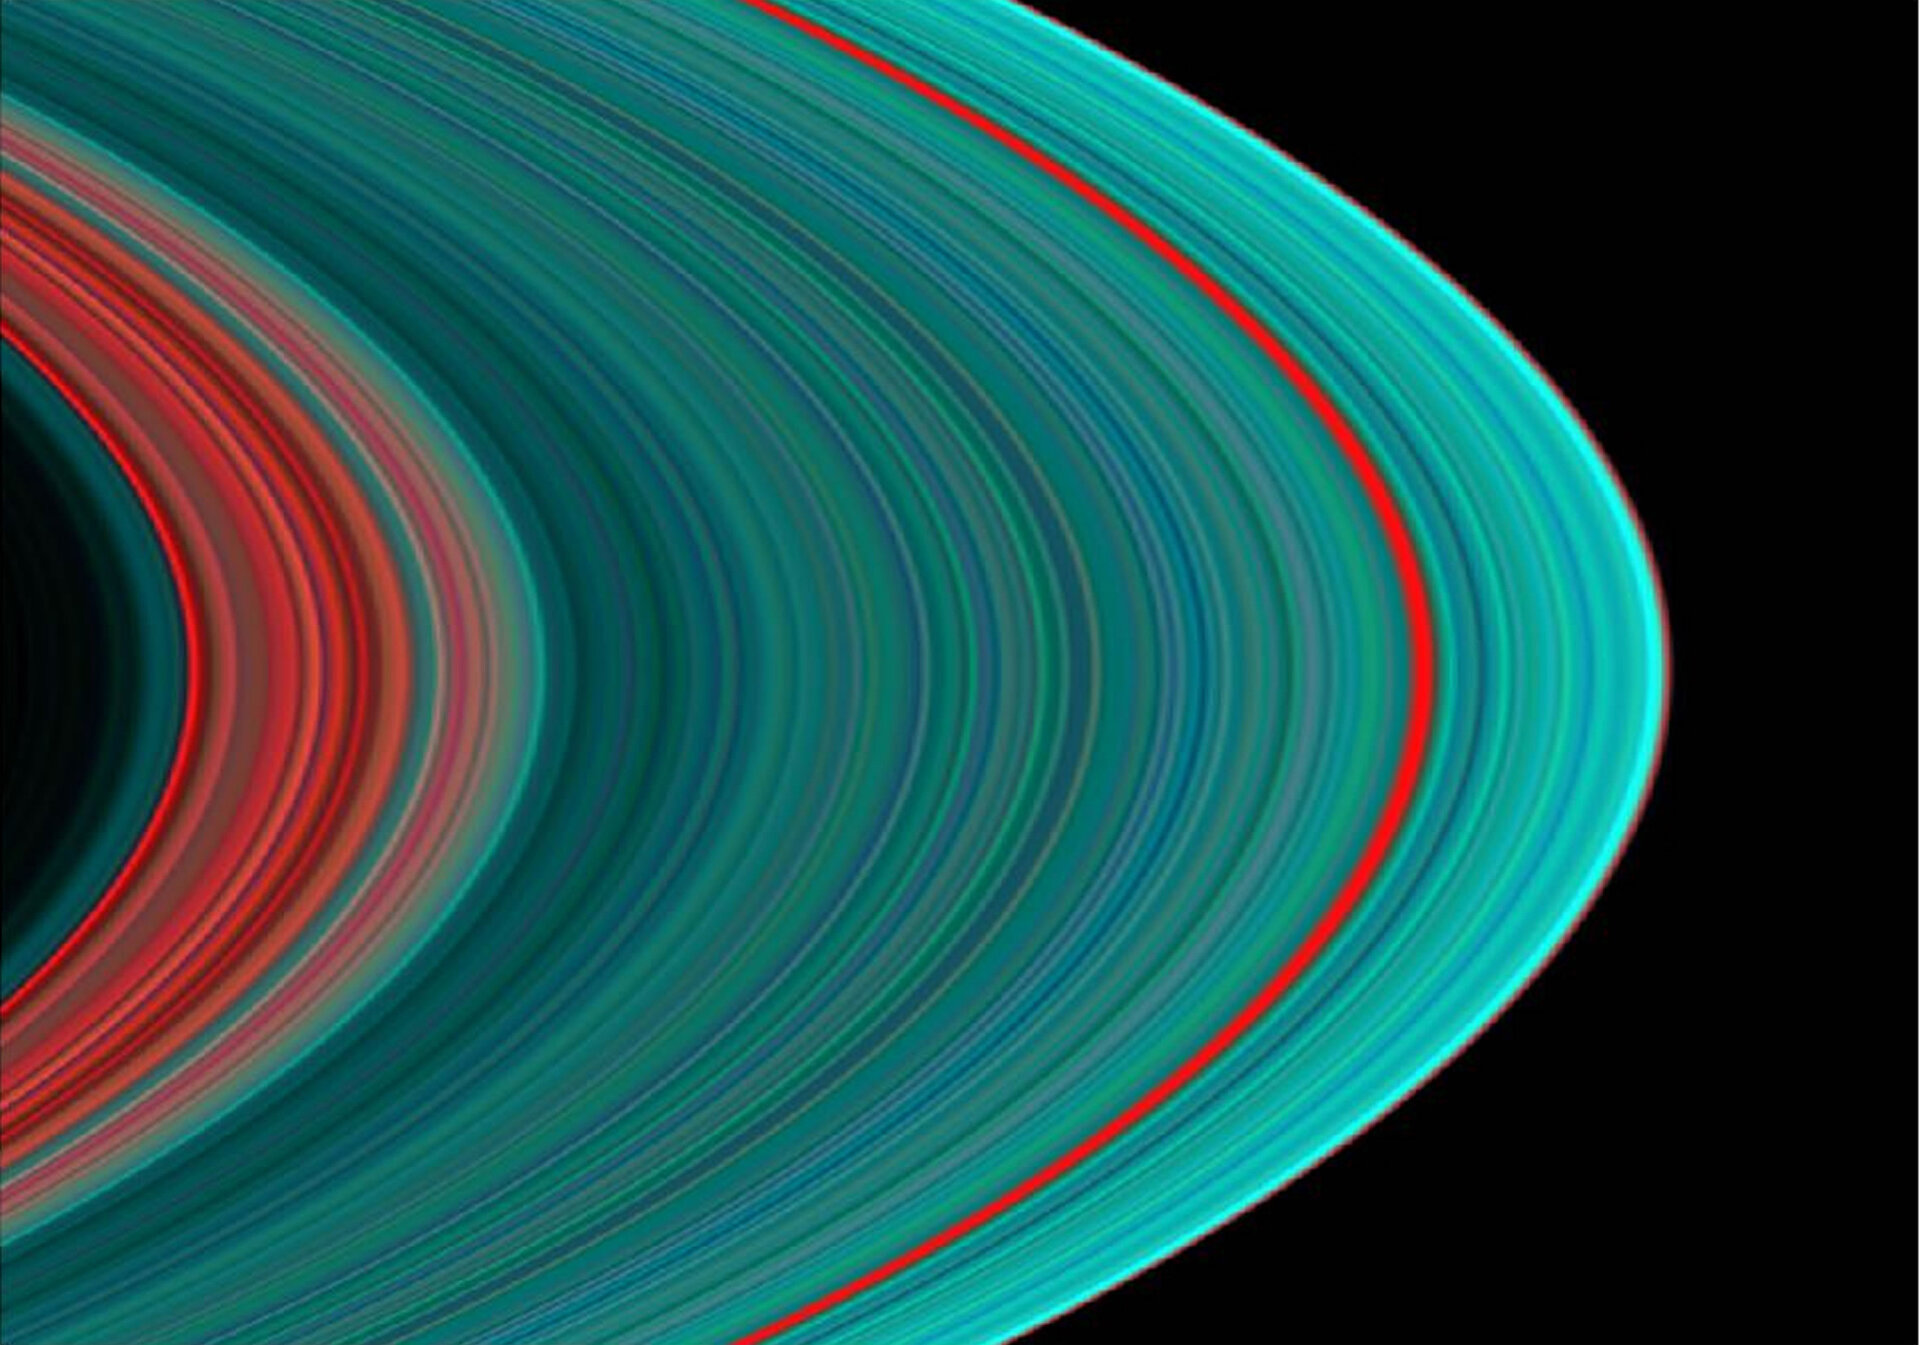 Planetary Rings | Astronomy